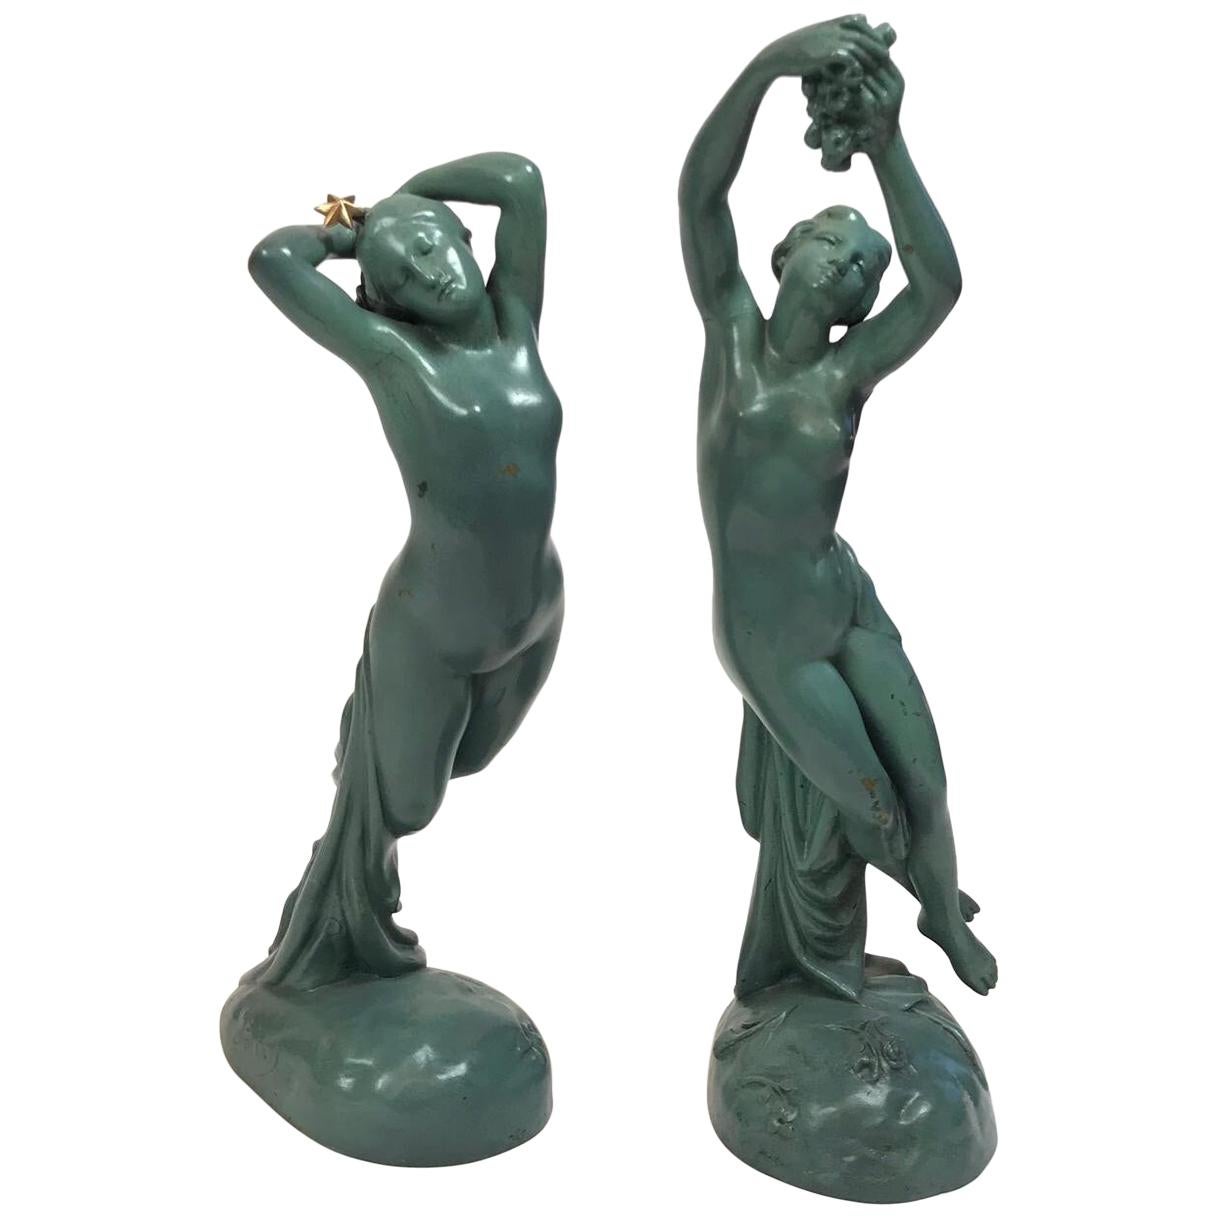 Joseph Michelangelo Pollet 2 Painted Bronze Figures, "Une Heure De La Nuit"